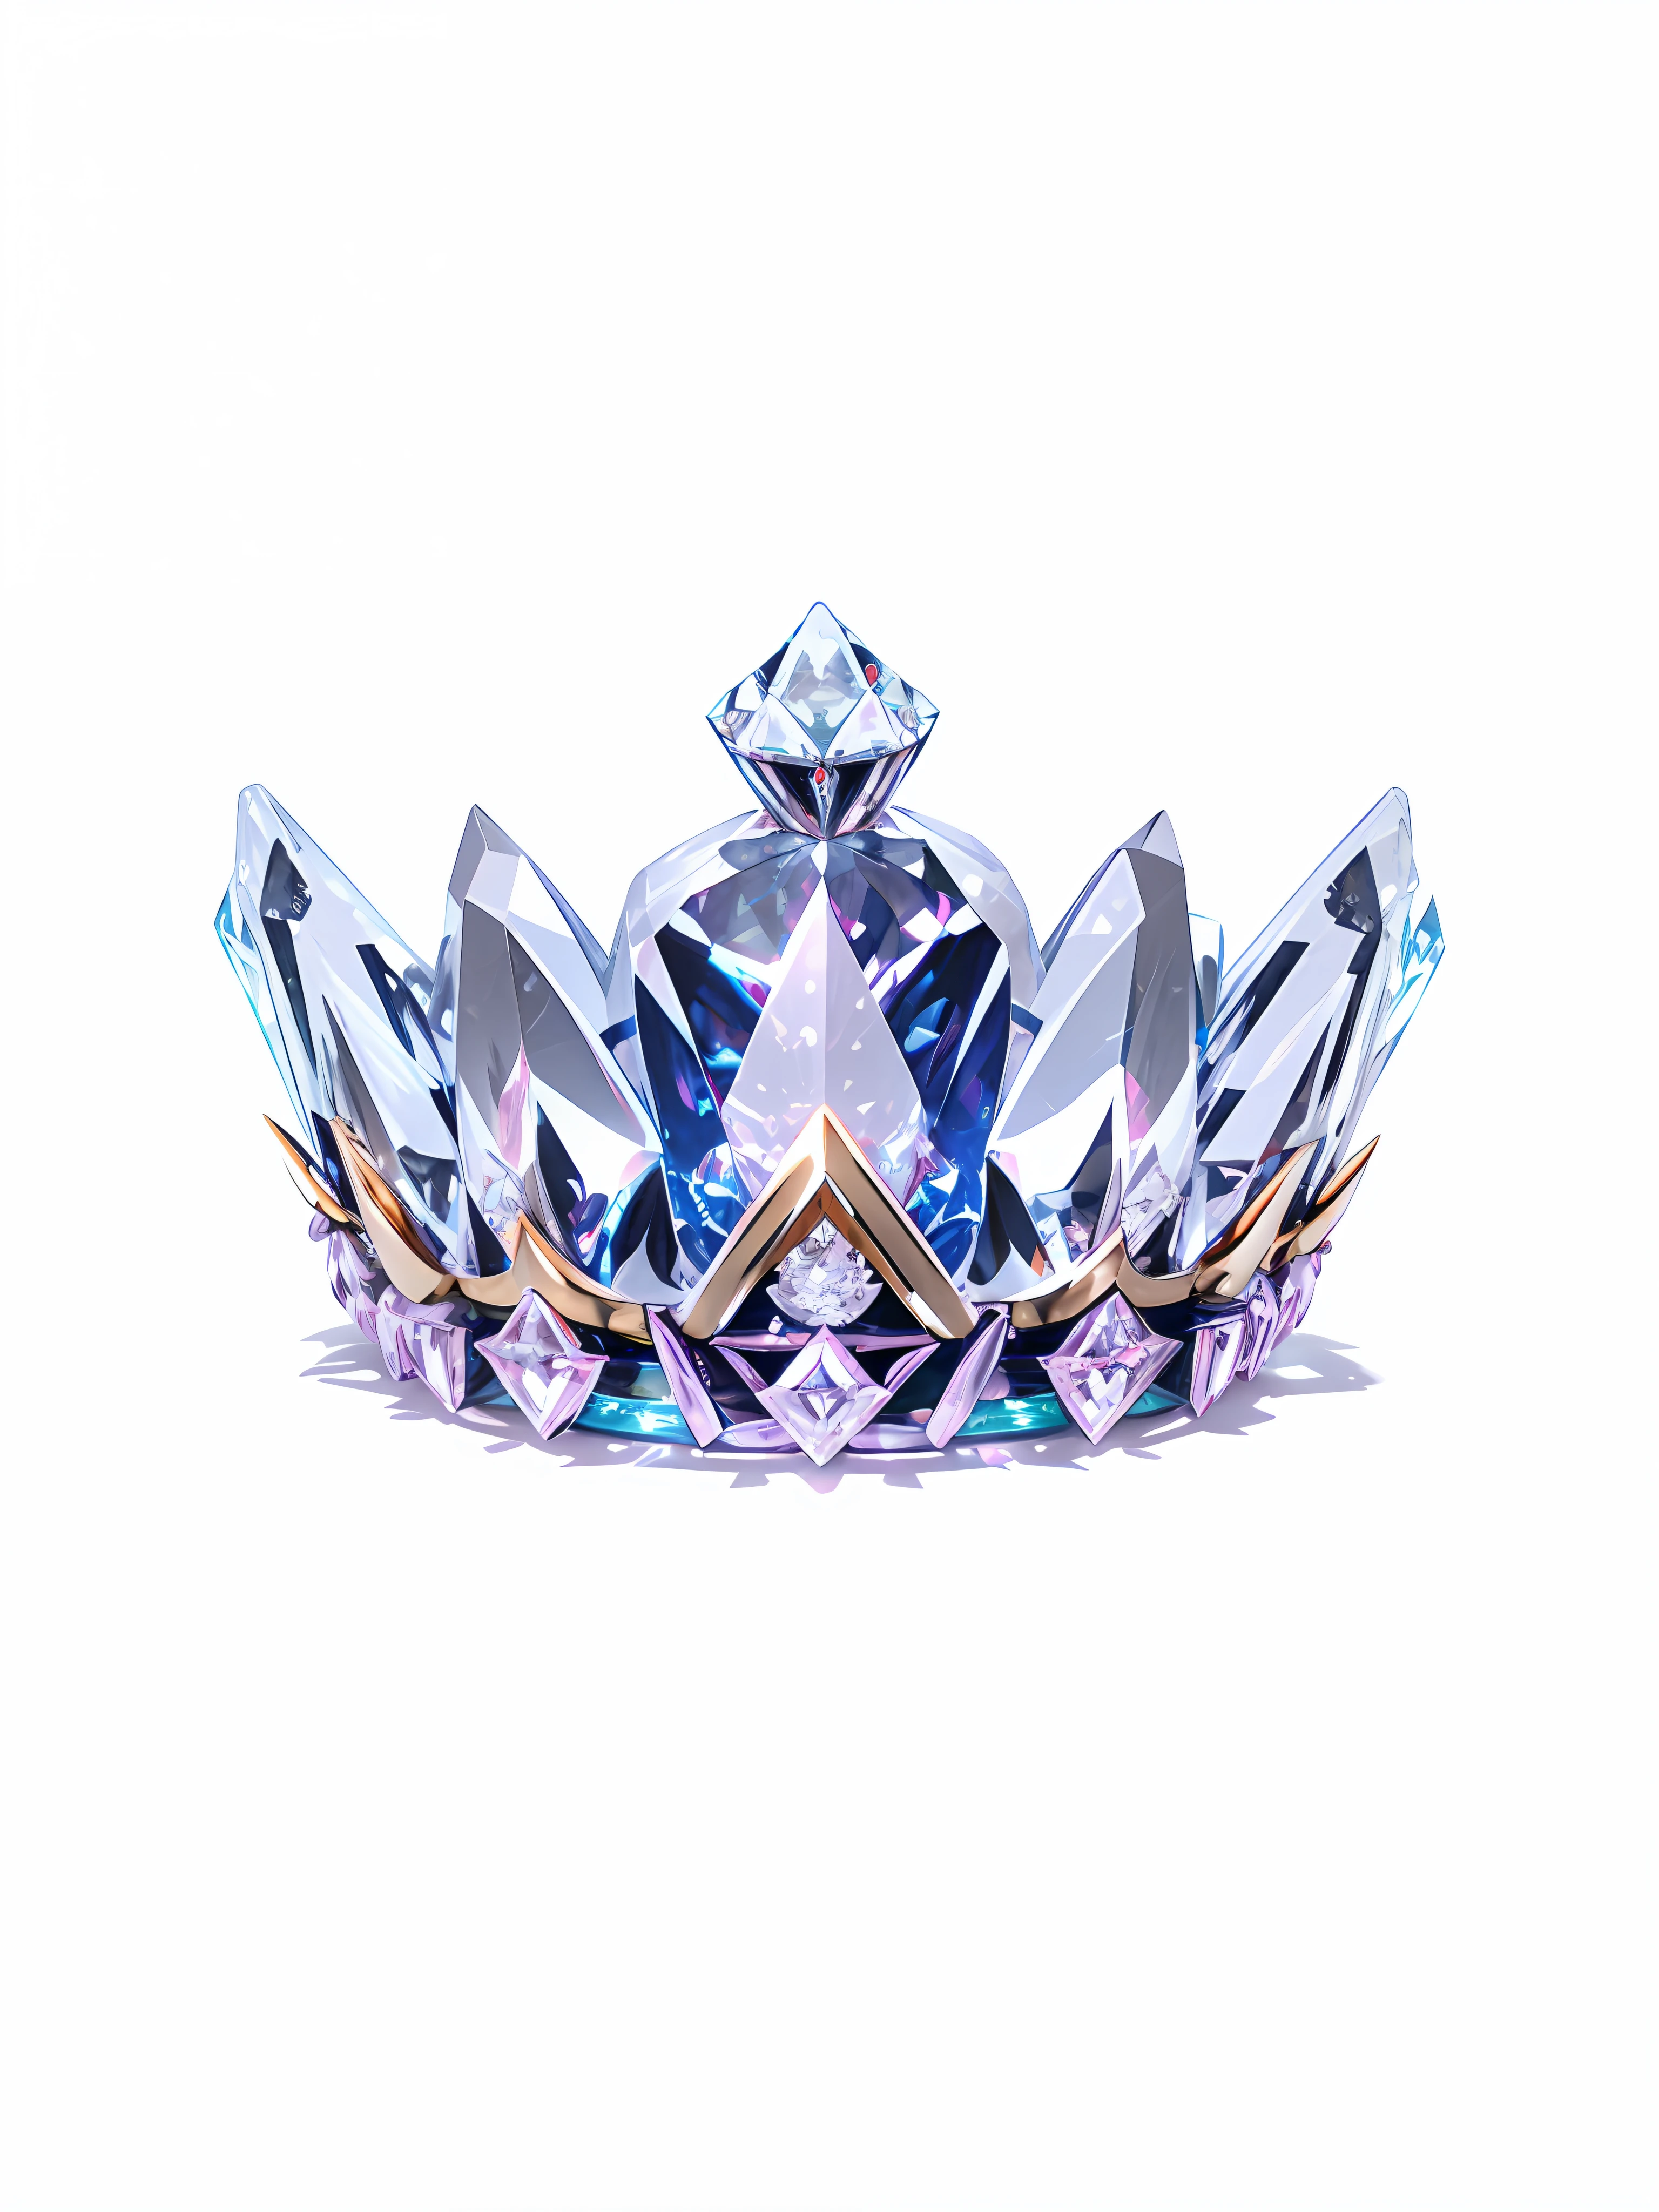 8K, (왕관 close-up), 긍정적인 관점!! , with a diamond 왕관 on a white background, 다이아몬드 날개!! , ((왼쪽과 오른쪽의 대칭 크라운)), 아주 멋진, 화려한, 복잡한 다이아몬드, ultra realistic fantasy 왕관, crystal 왕관, white laser 왕관, 크리스탈 화관, floating 왕관, (광선 추적), ((깨끗한 배경)), 왕관, giant diamond 왕관, 다이아몬드 티아라, amazing flower 왕관, diamond 왕관 --auto --s2